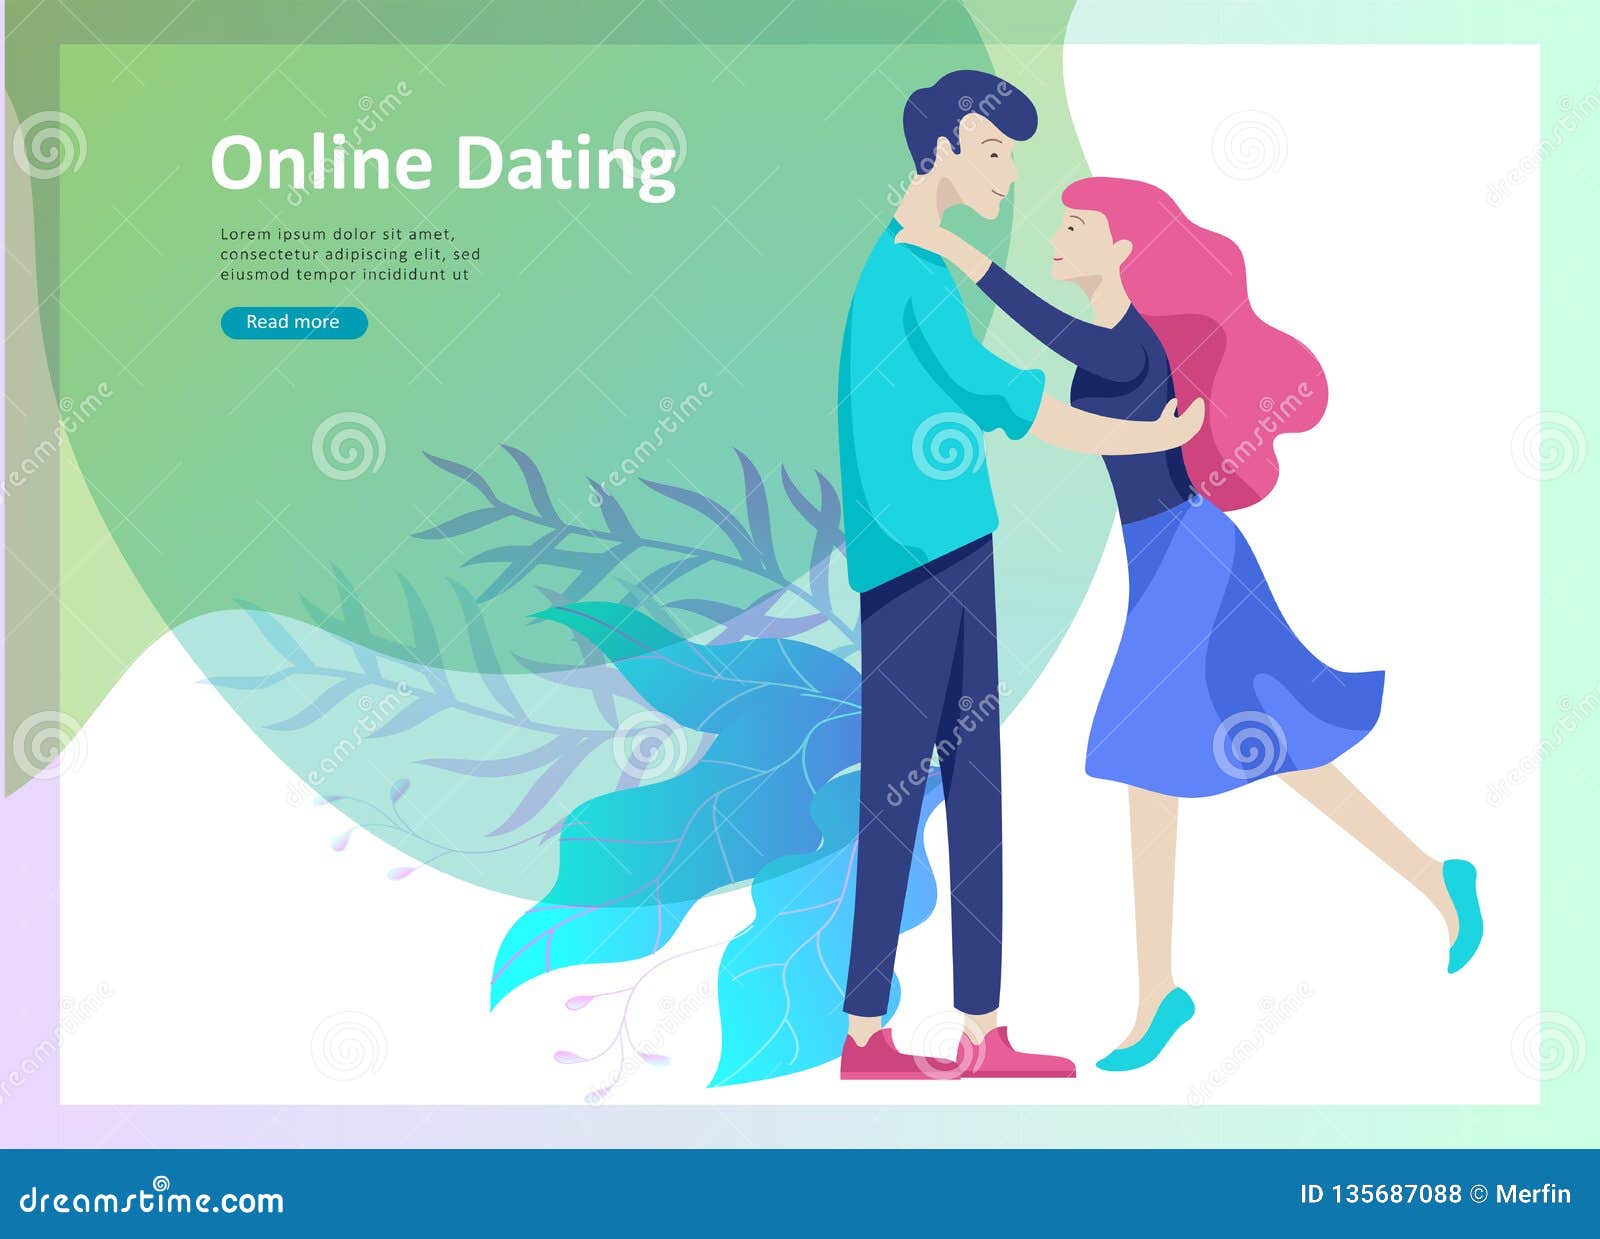 For login dating seniors Jewish